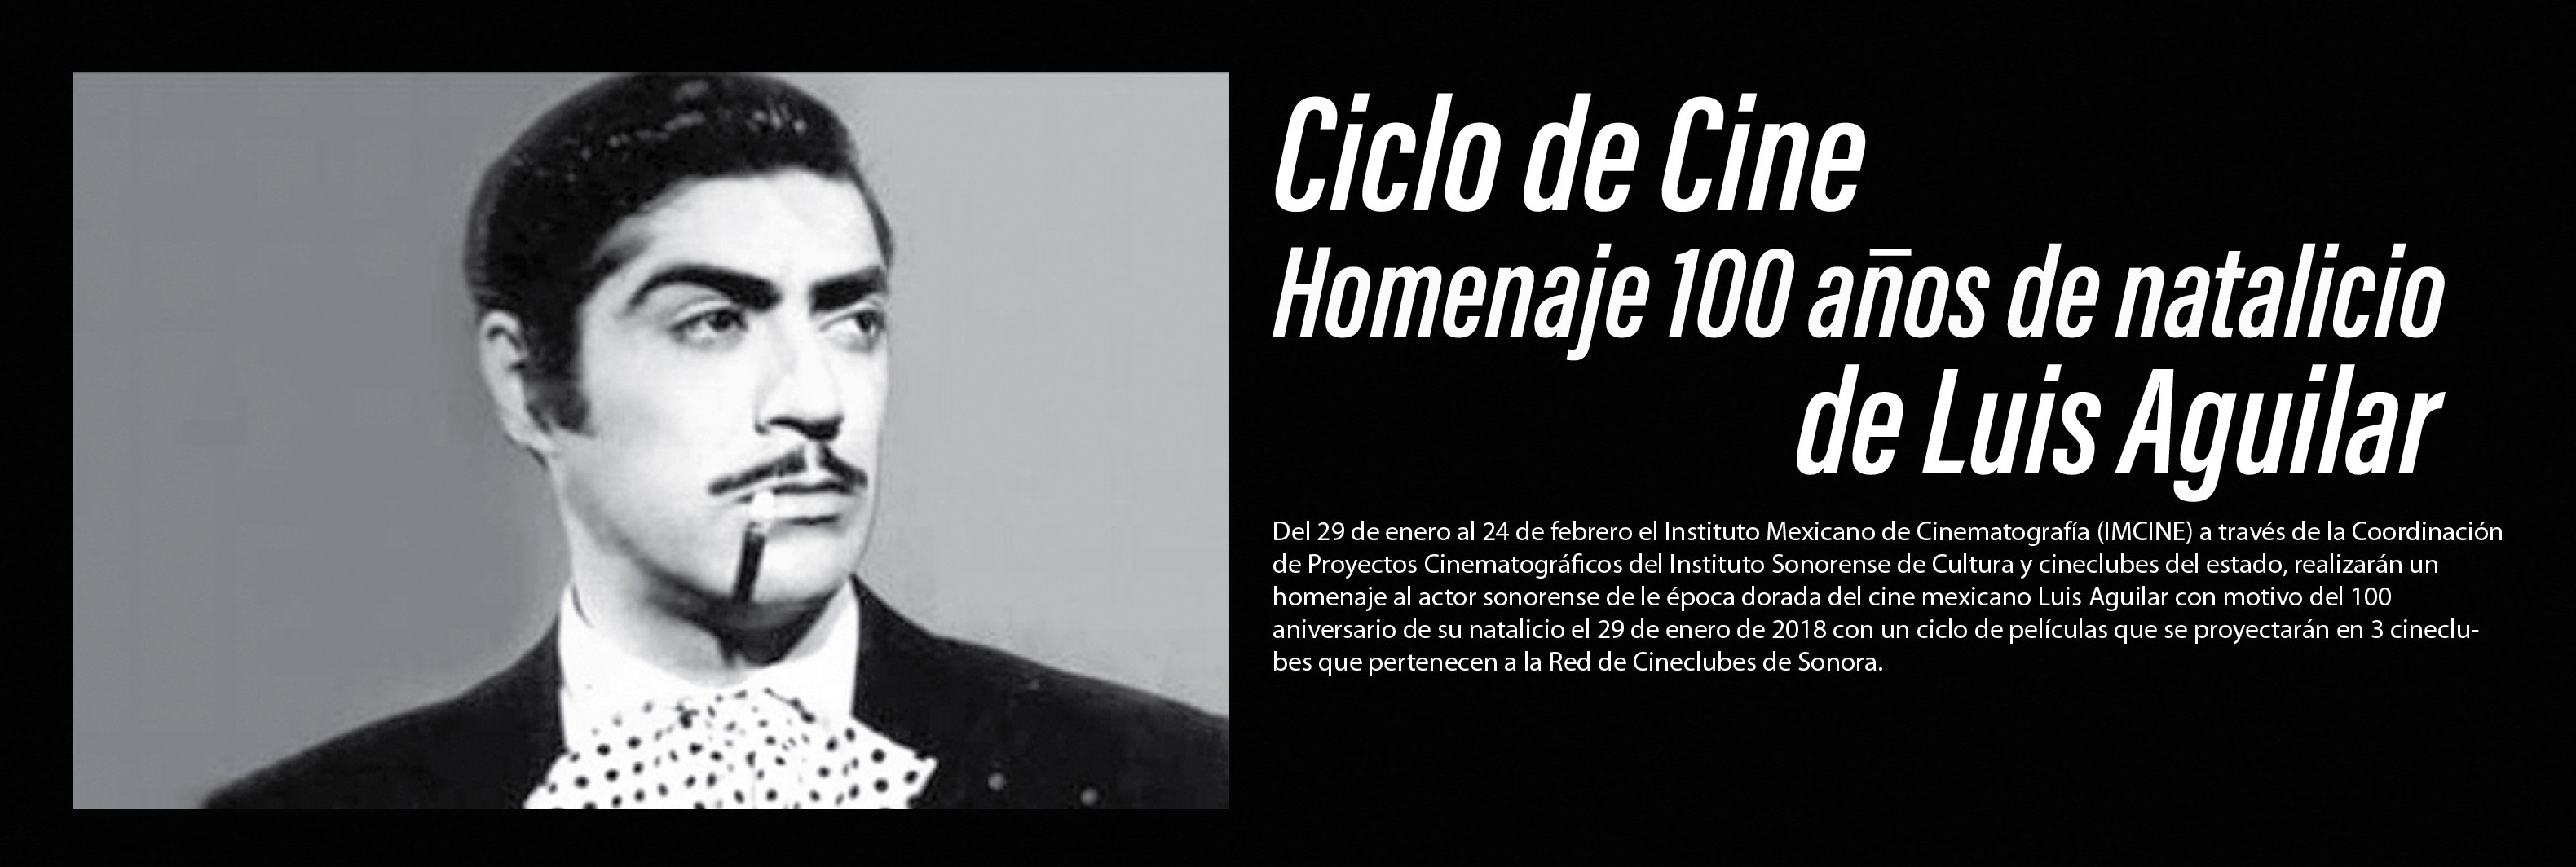 Ciclo de Cine: Homenaje a Luis Aguilar 